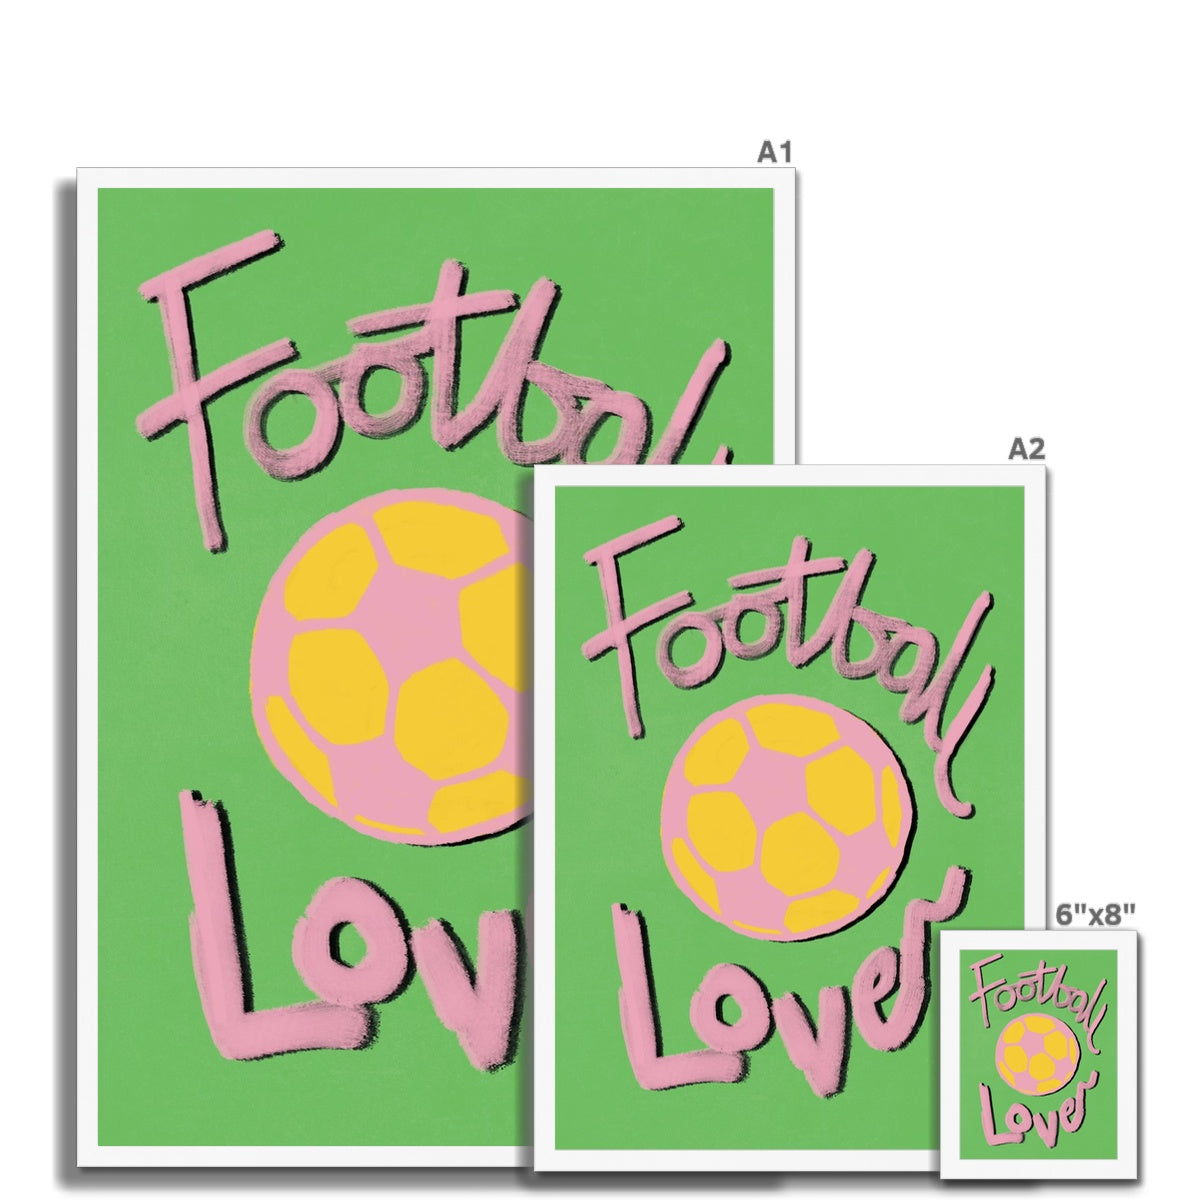 Football Lover Print - Green, Pink, Yellow Framed Print